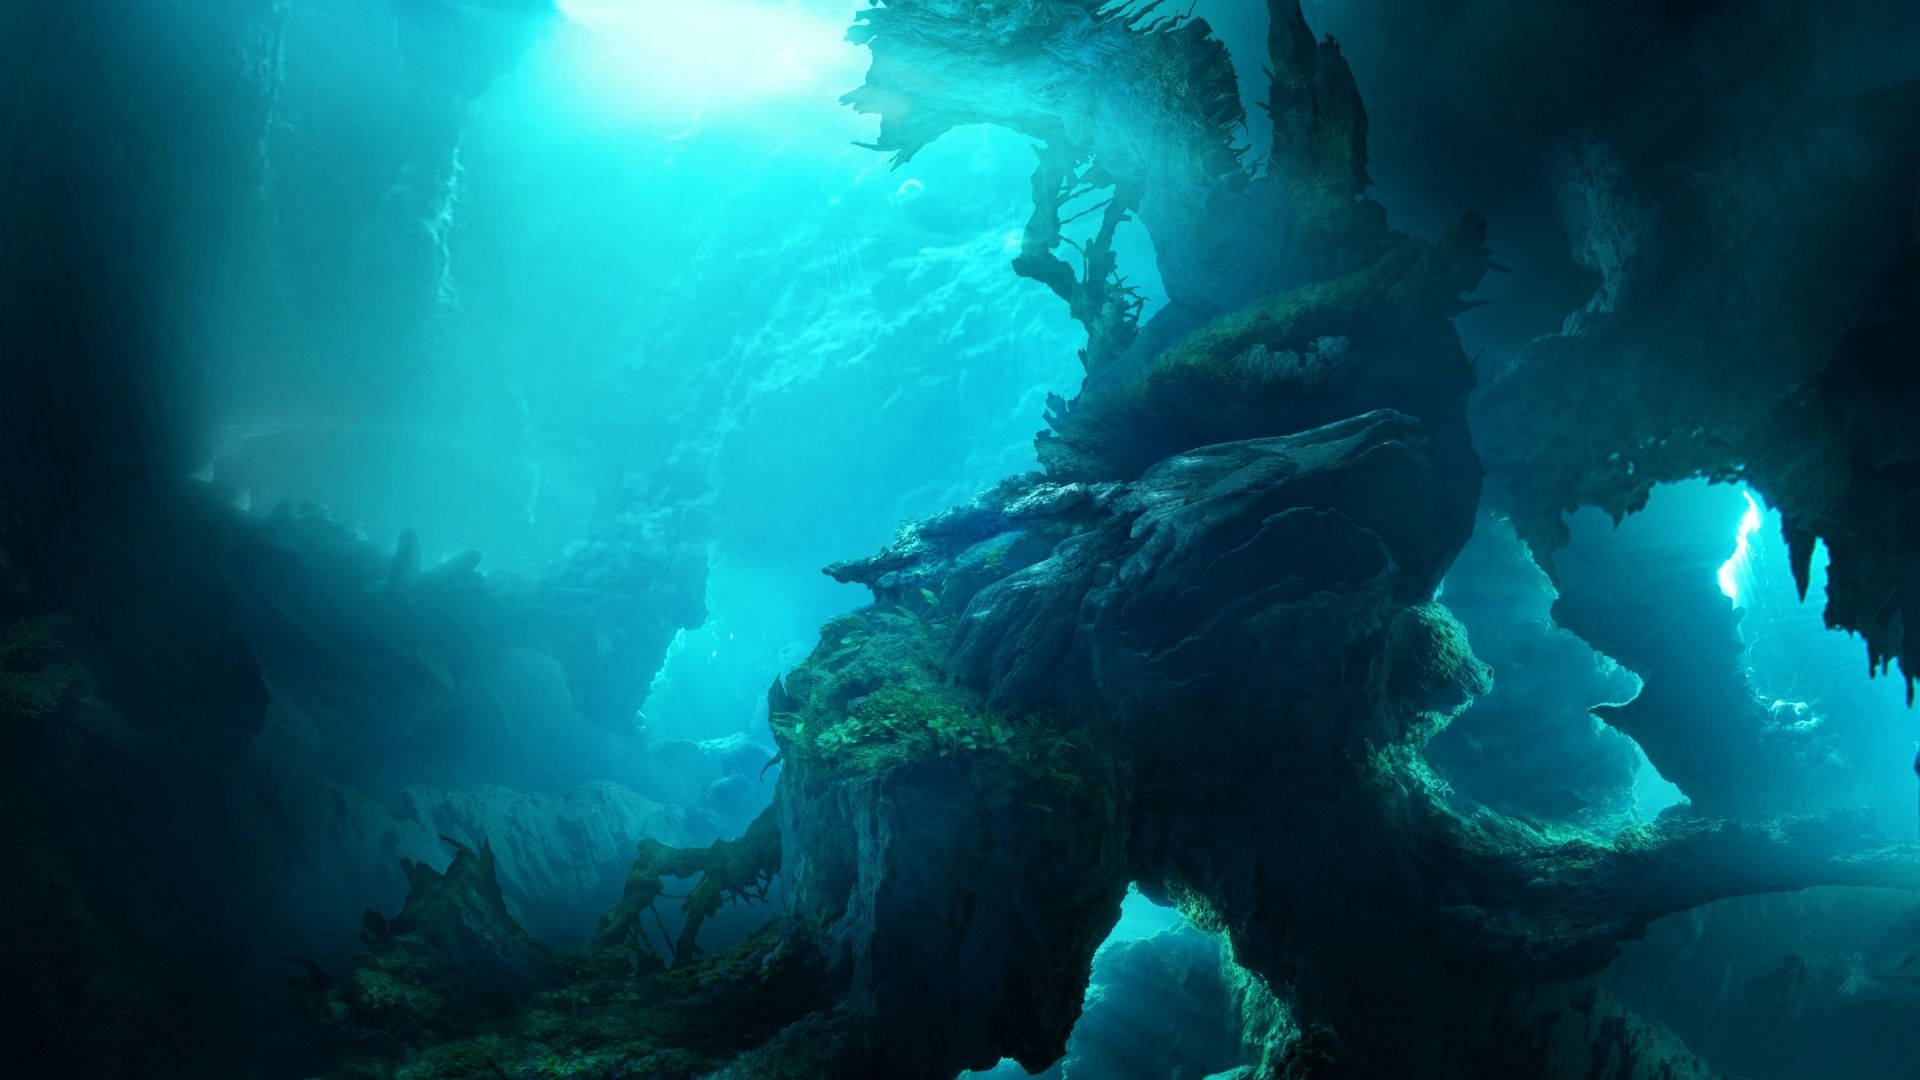 Mystical Underwater Cave Exploration Background